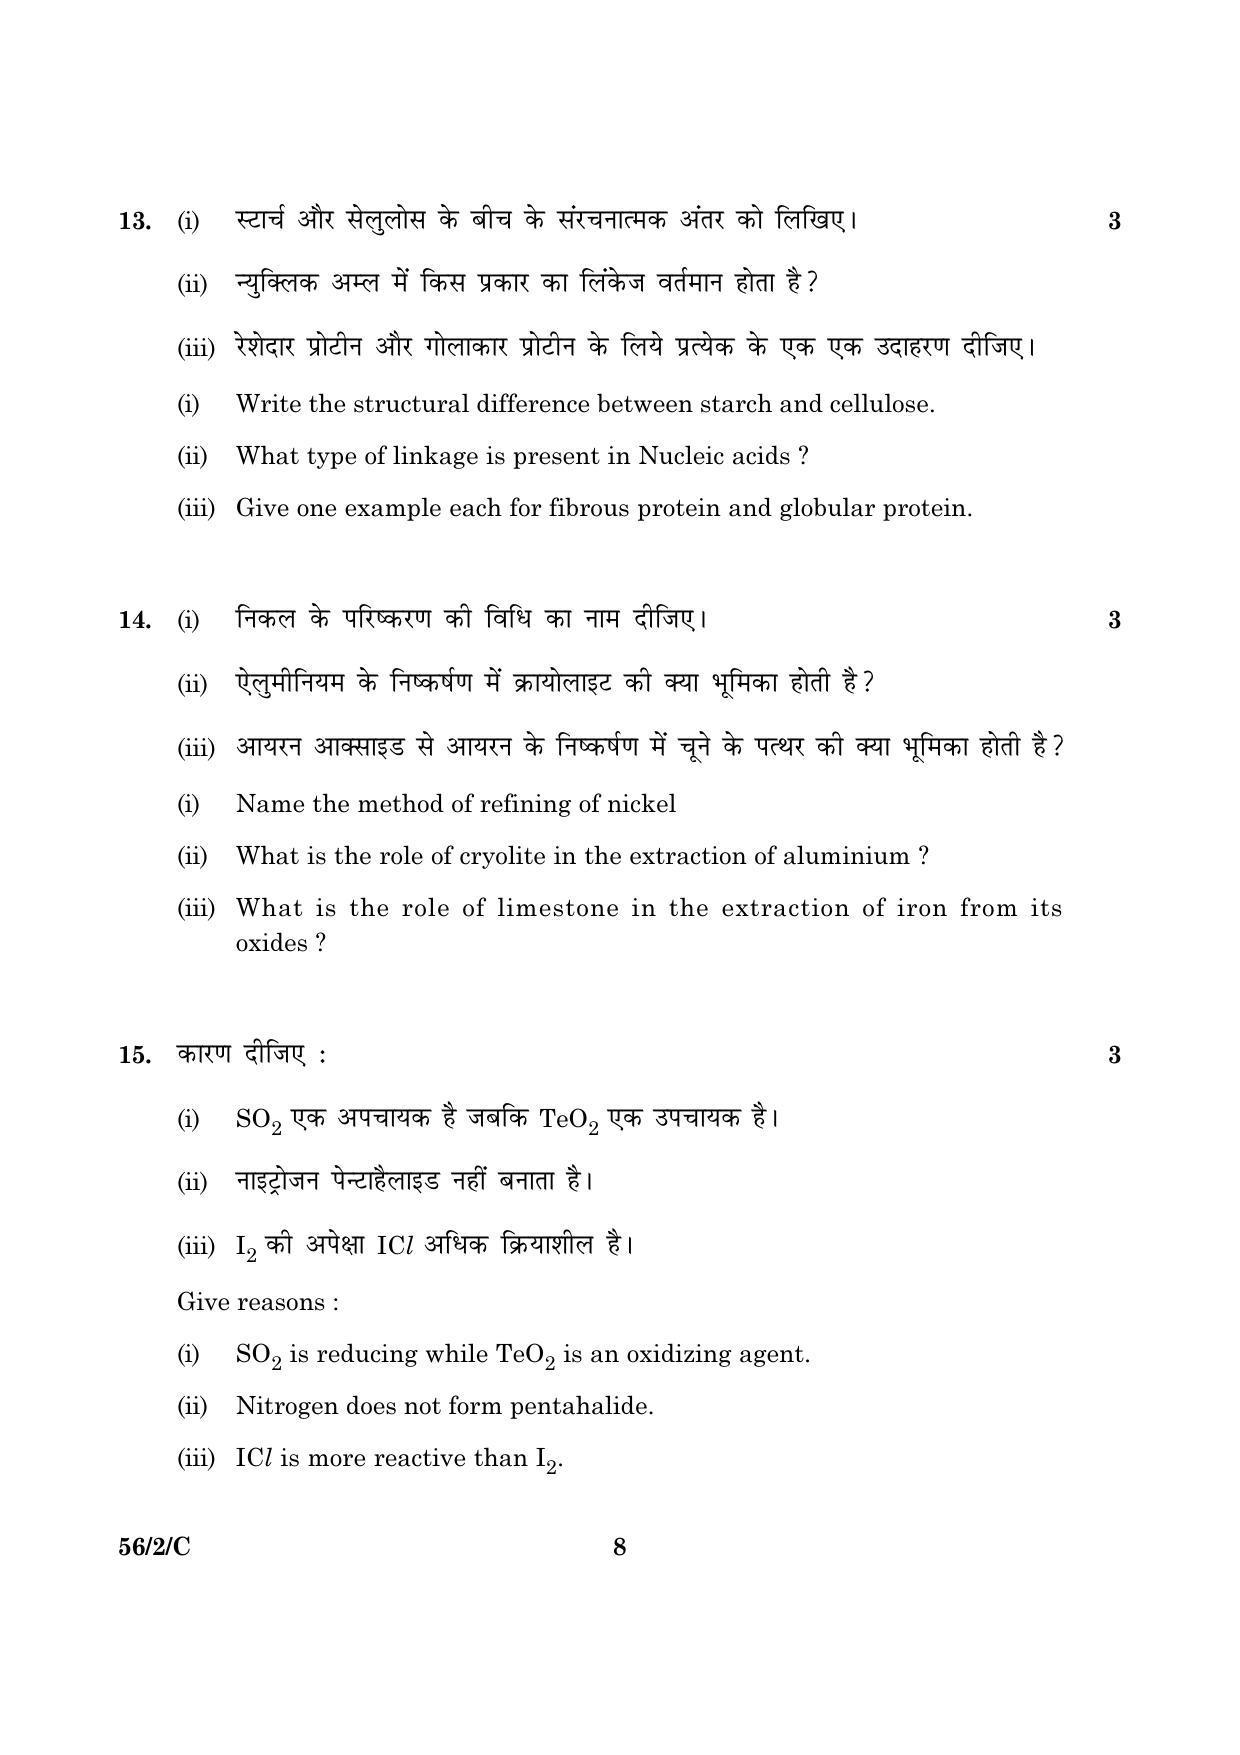 CBSE Class 12 056 Set 2 C Chemistry 2016 Question Paper - Page 8